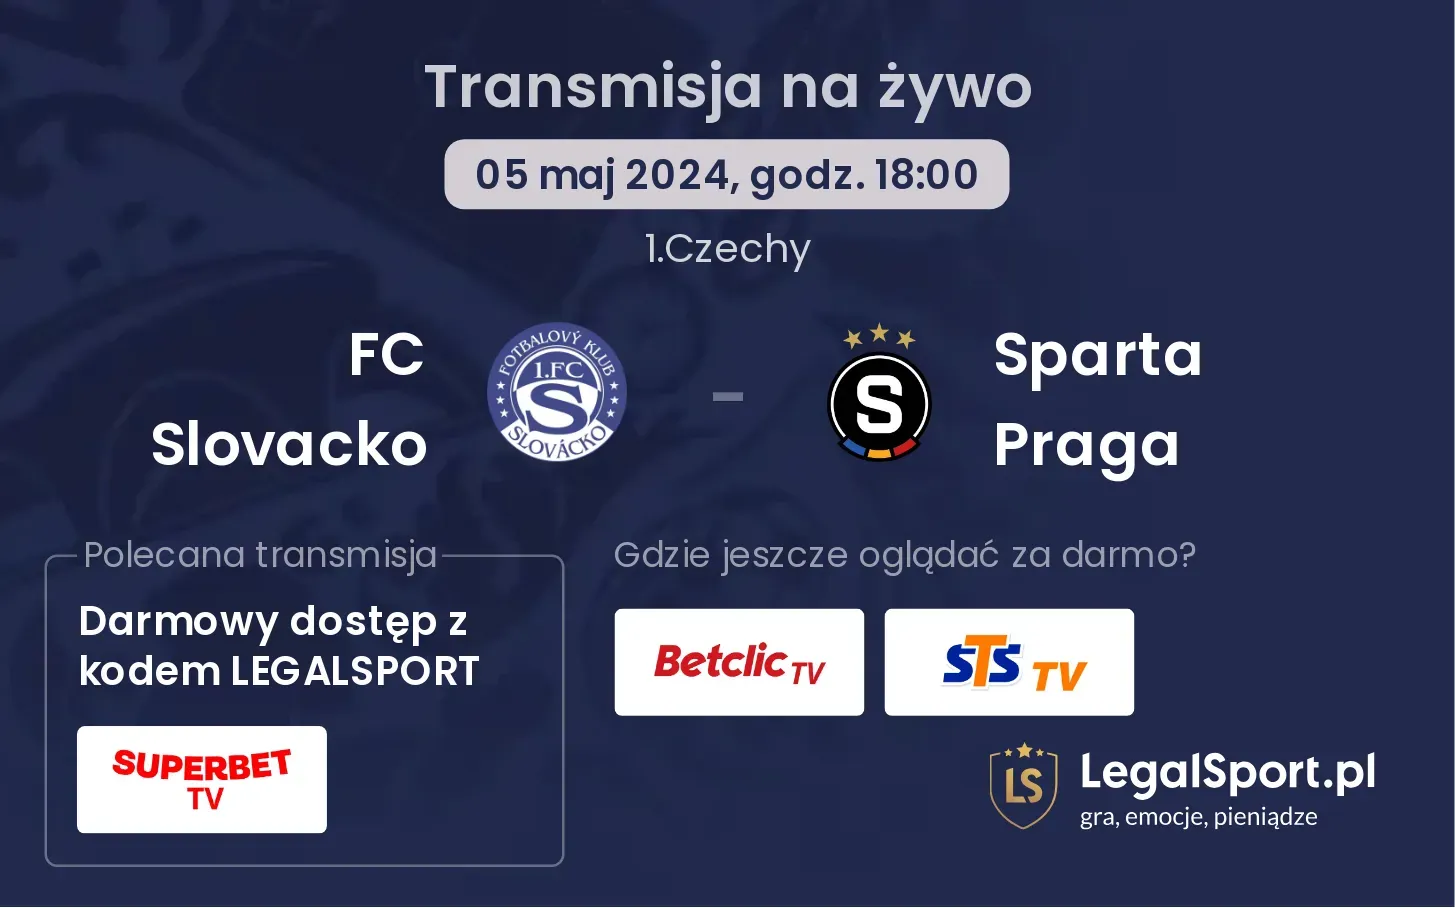 FC Slovacko - Sparta Praga transmisja na żywo